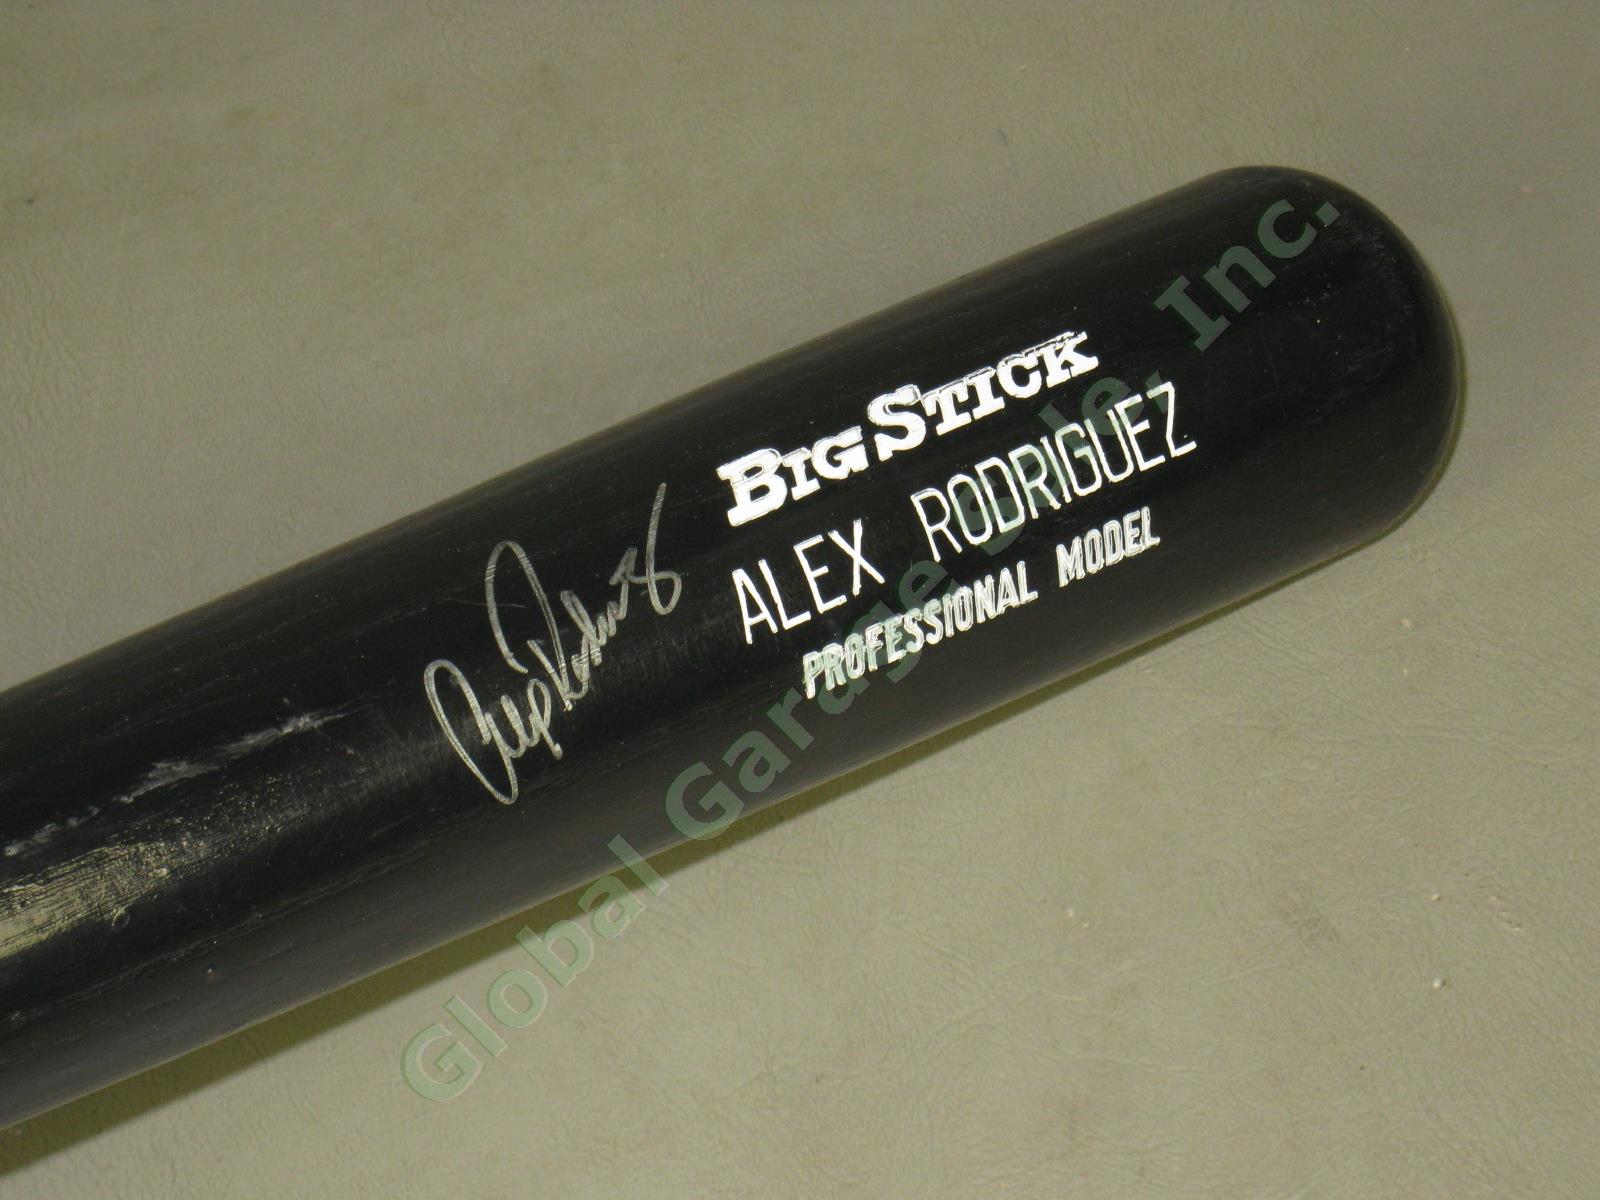 Alex Rodriguez A-Rod Hand Signed Rawlings Big Stick Baseball Bat NY Yankees NR! 1